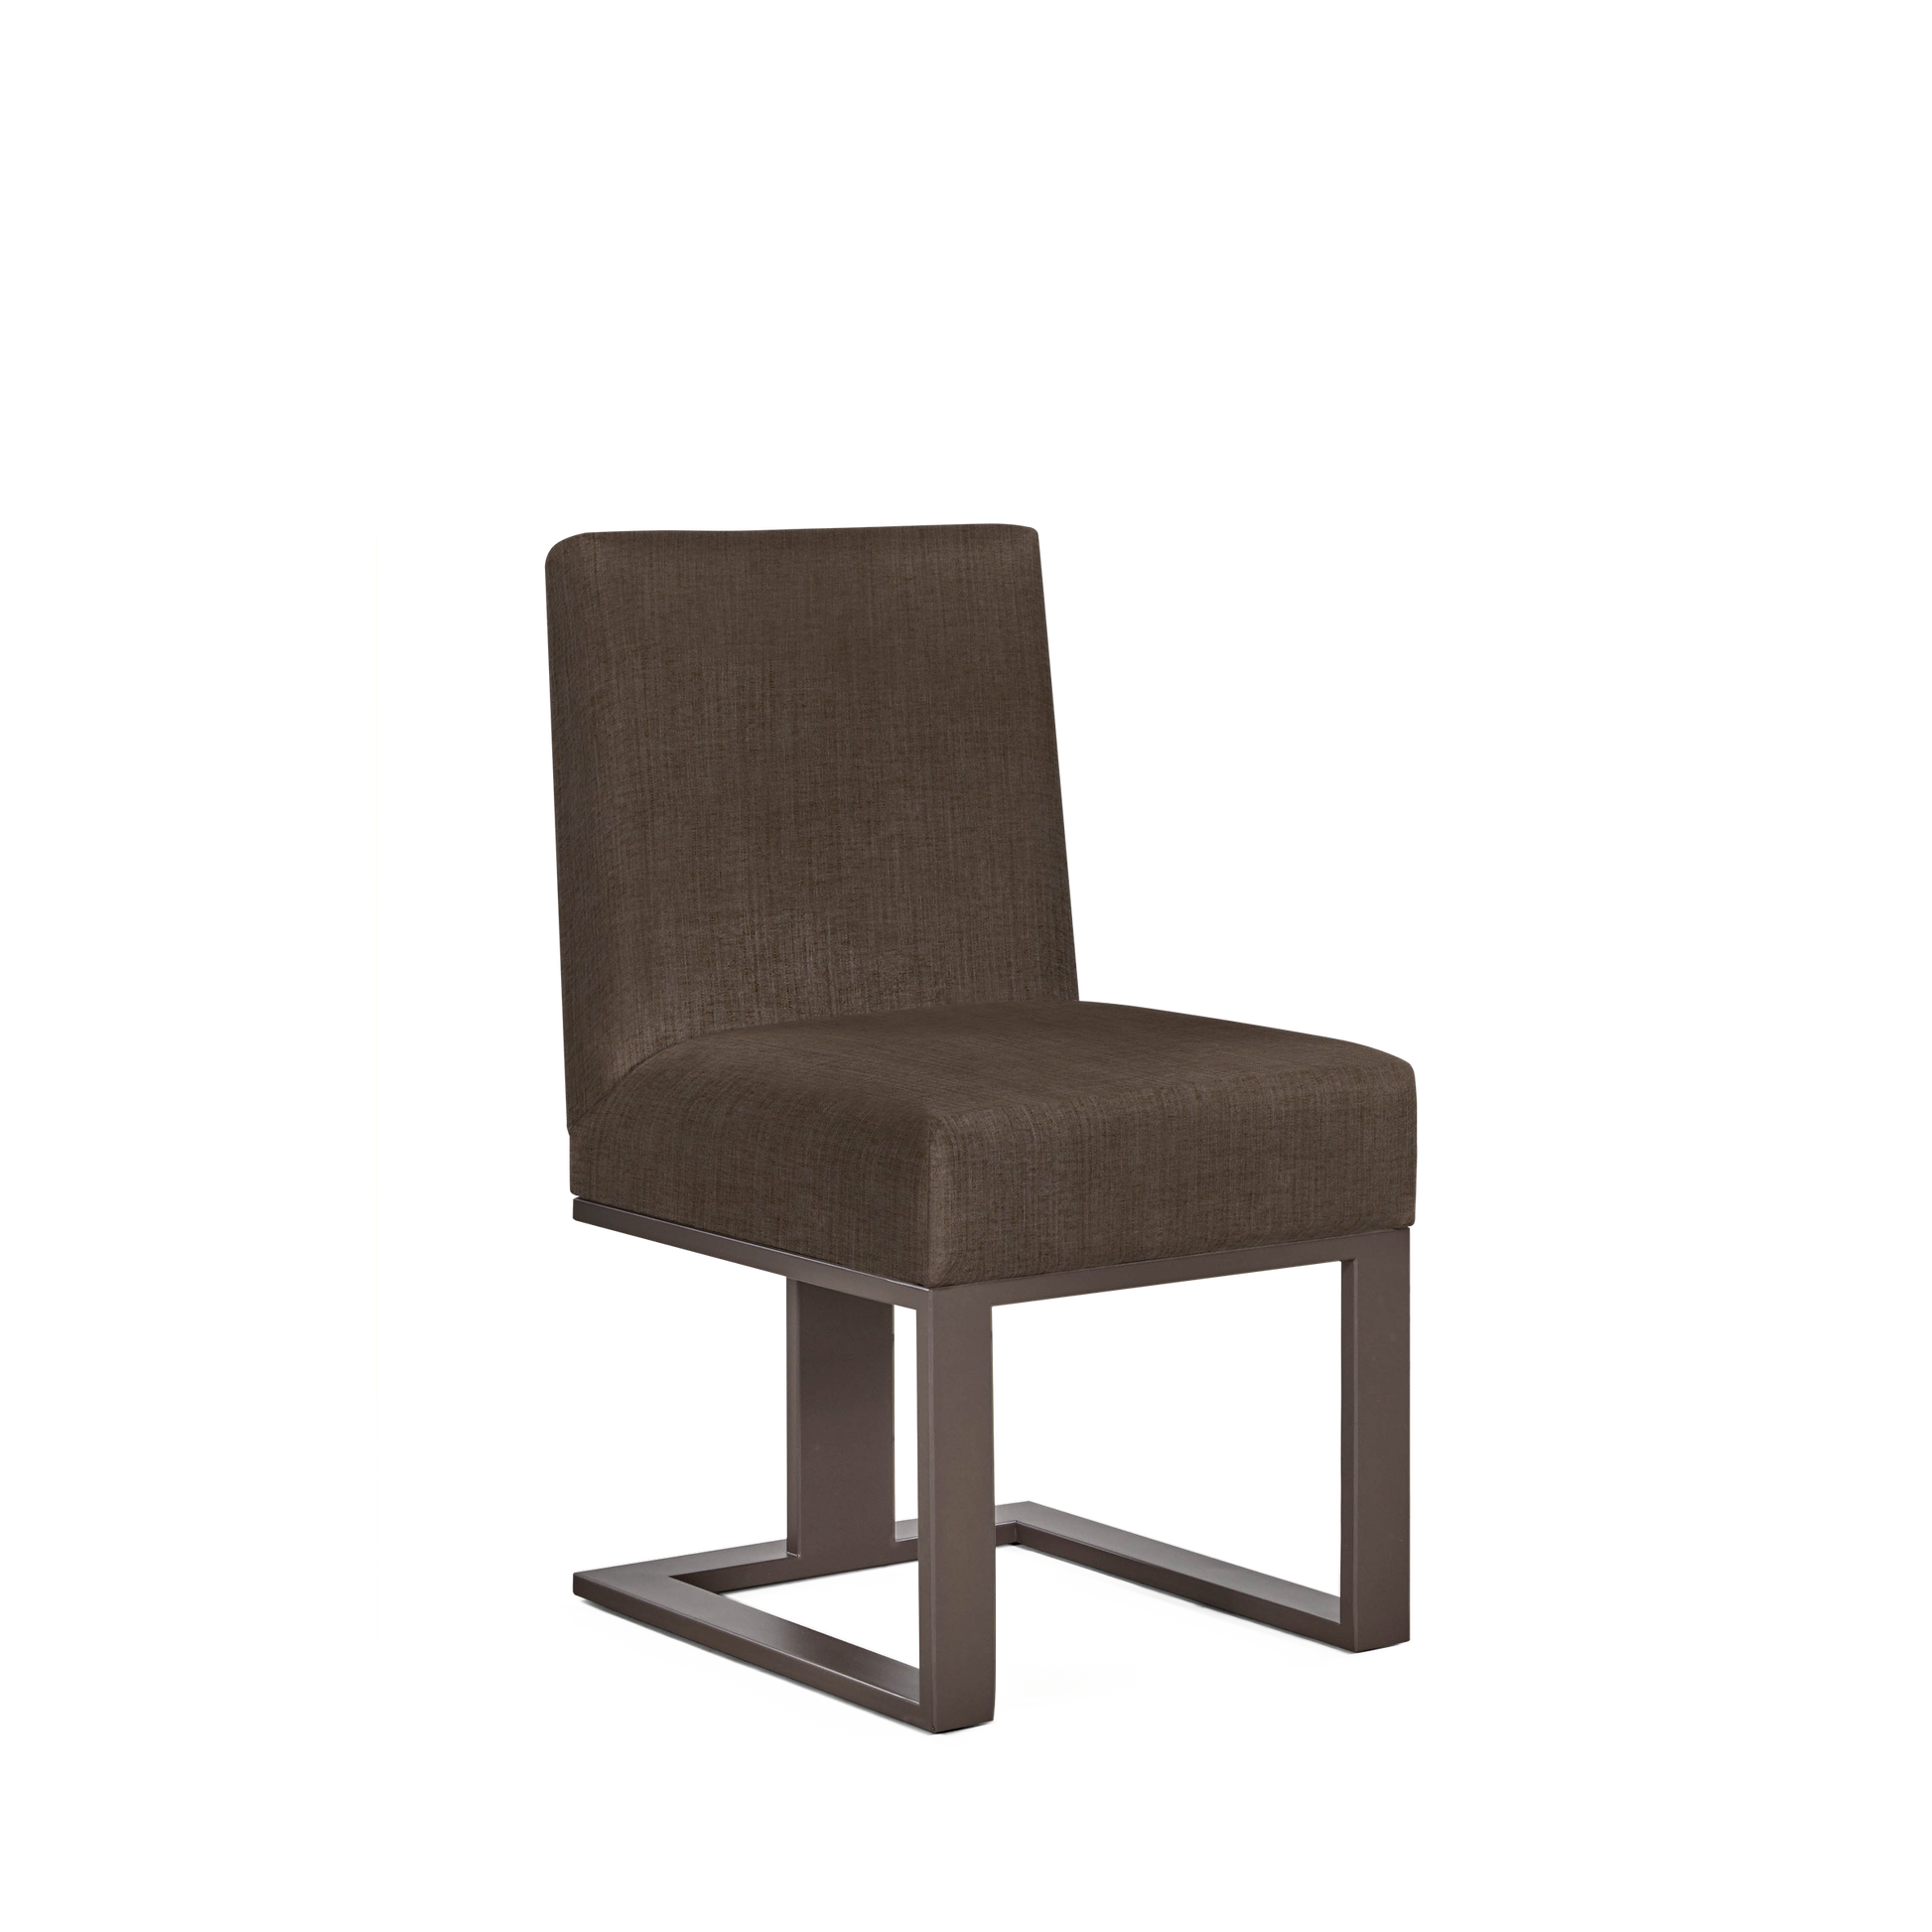 Len chair with warm grey textile and moka wood legs 